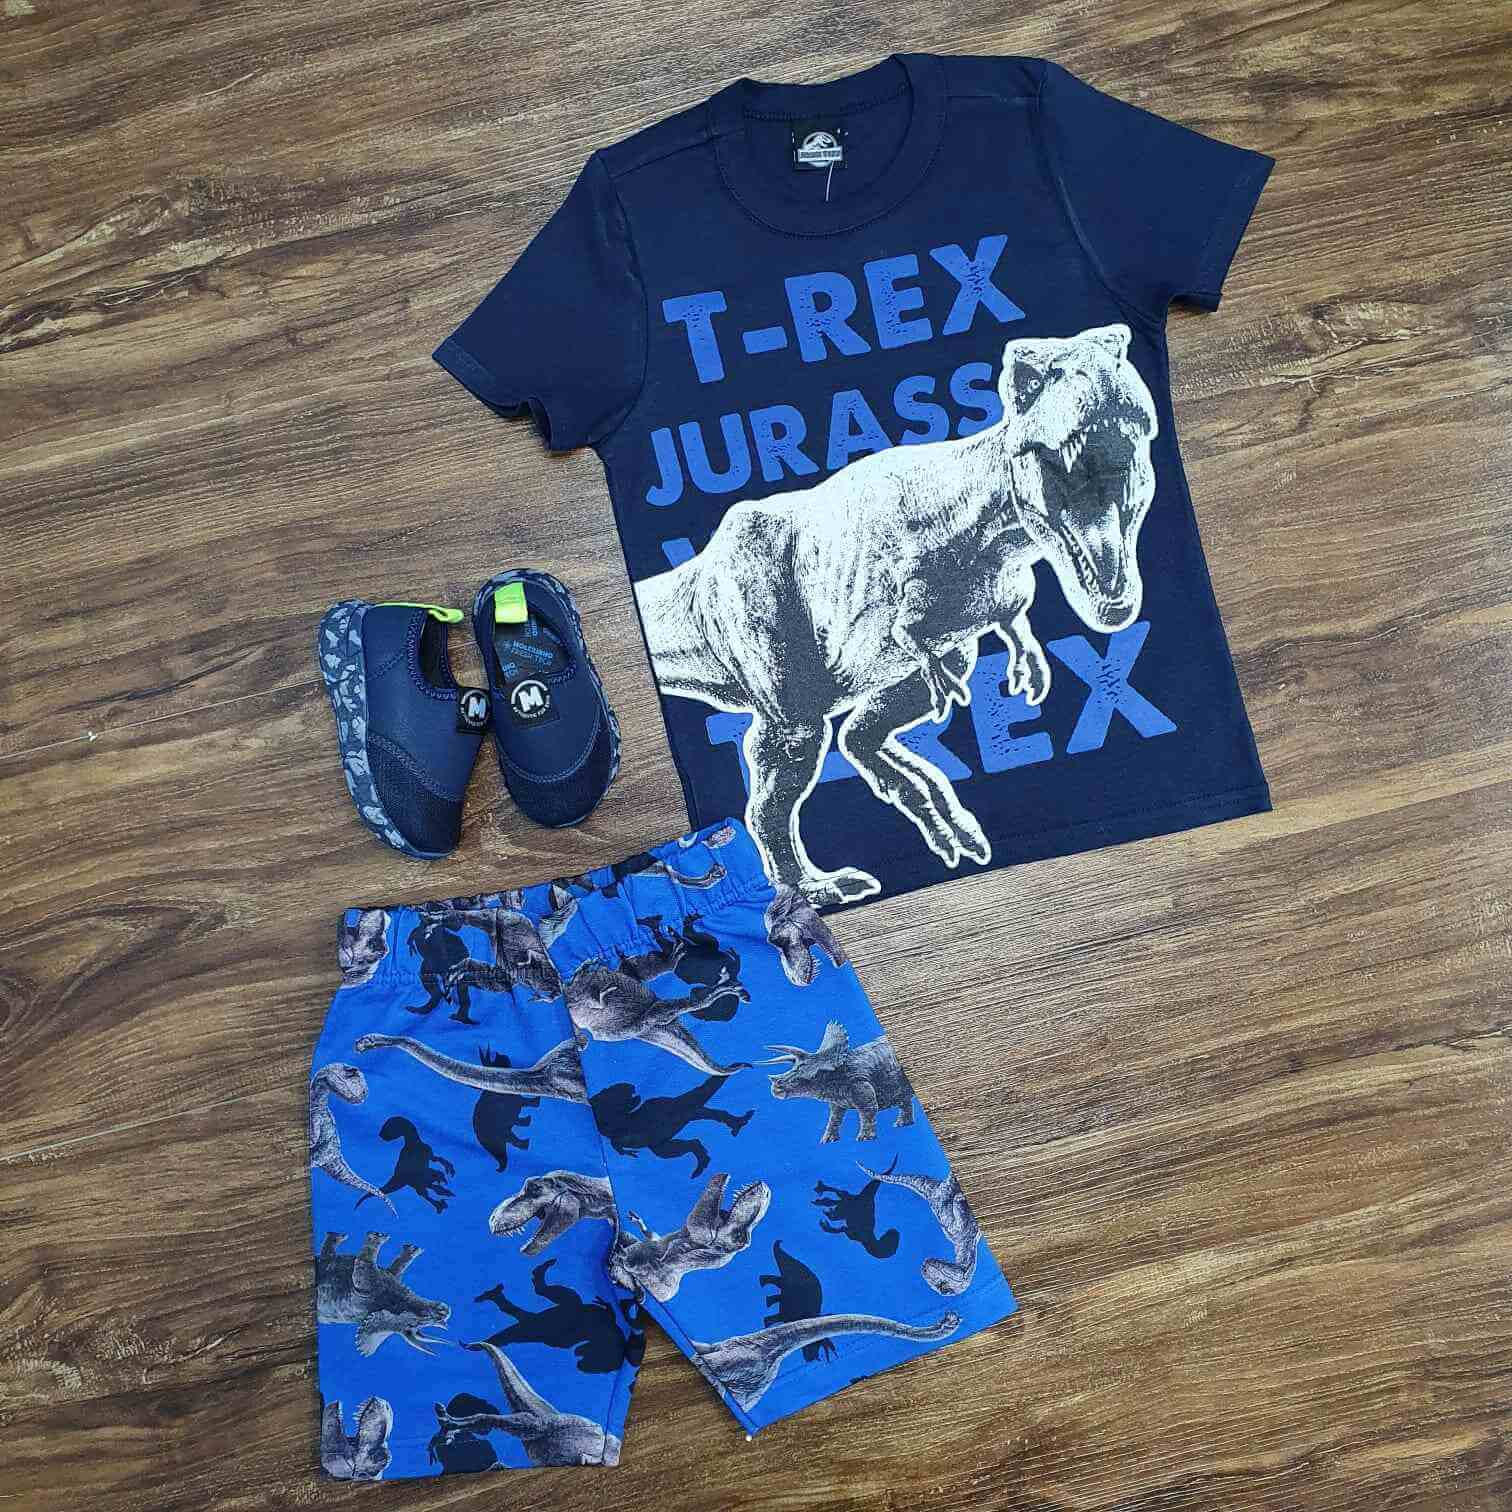 Conjunto T-Rex com Camiseta Azul Infantil